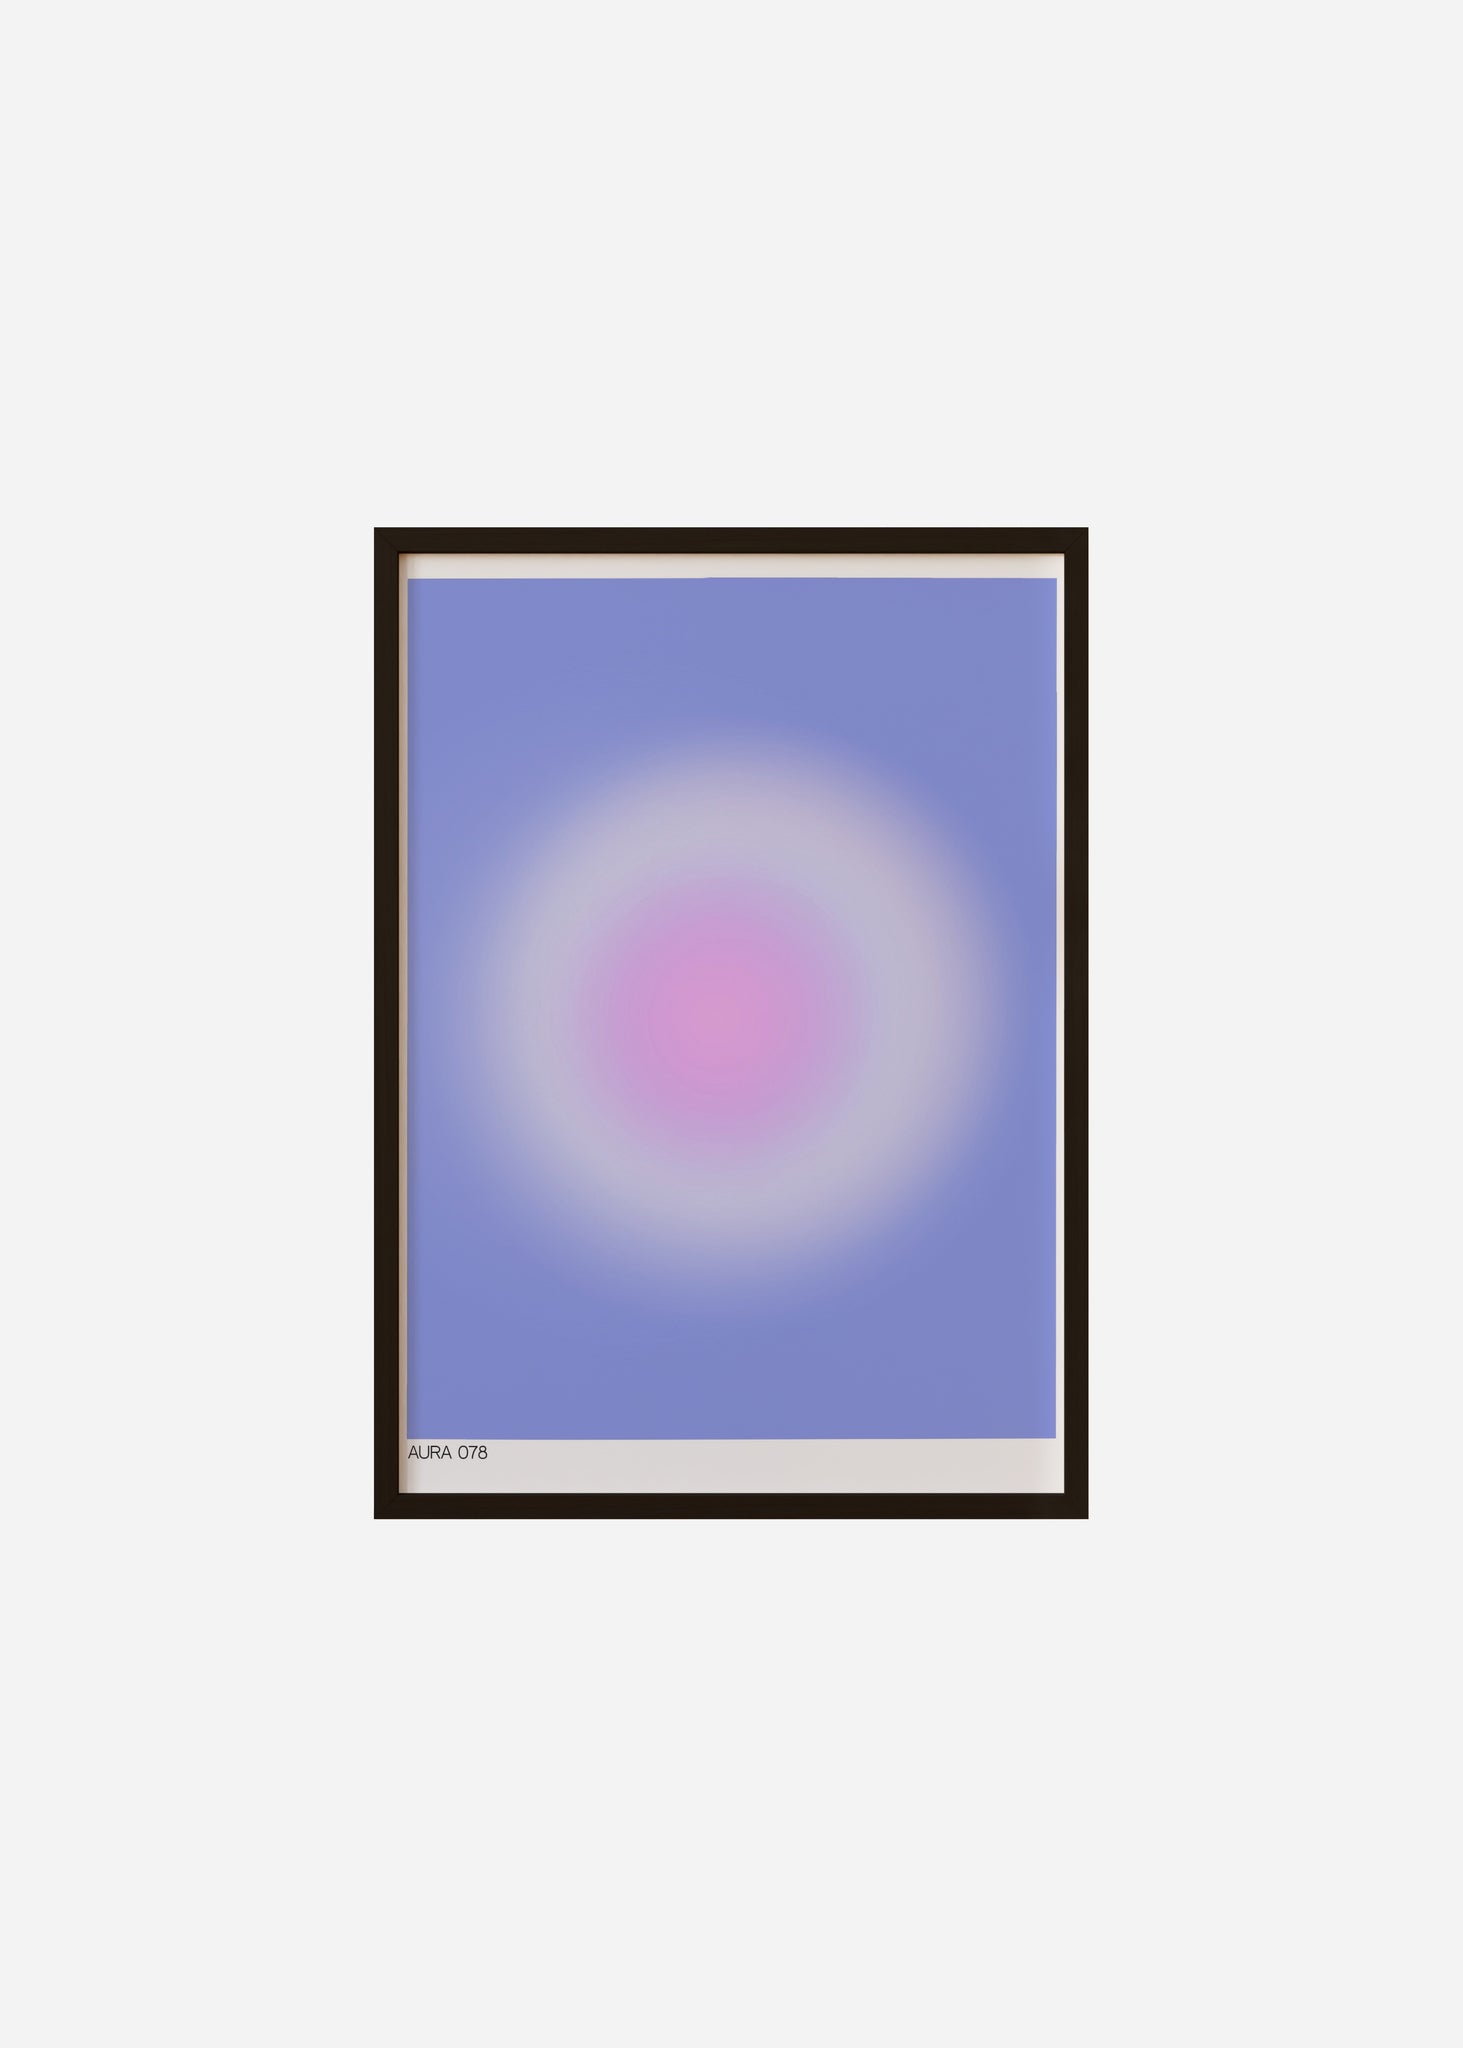 aura 078 Framed Print